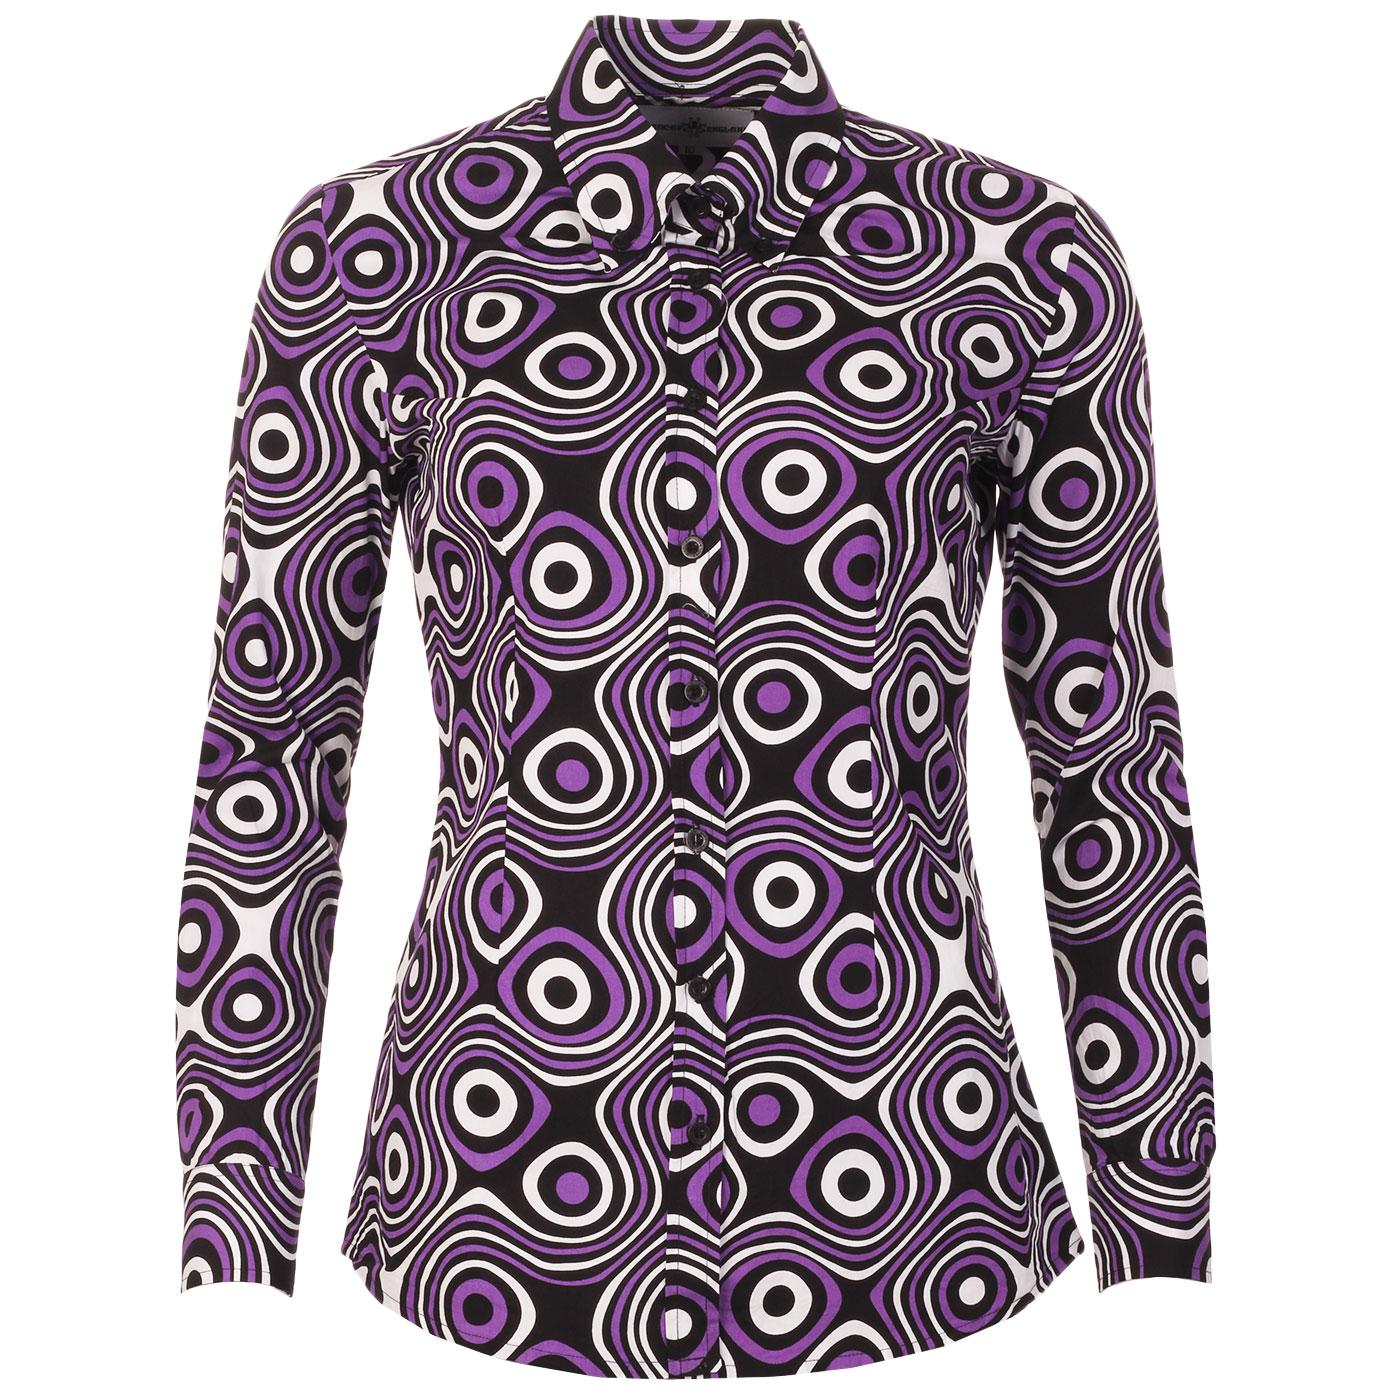 Madcap England Women's 1960s Mod Op Art Button Down Shirt in Royal Lilac